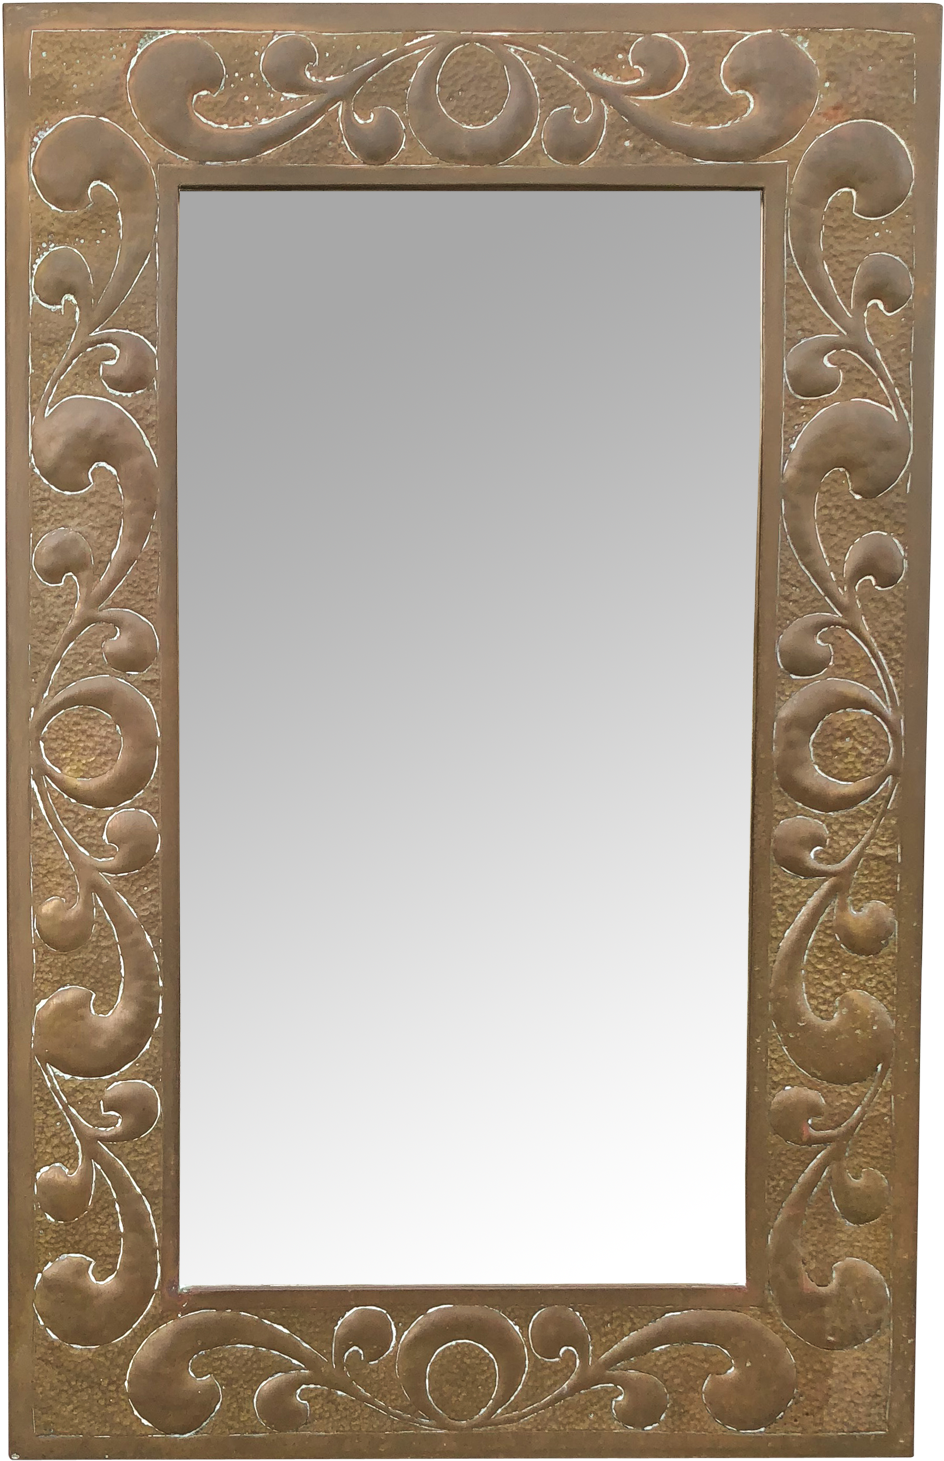 Ornate Antique Wooden Mirror Frame